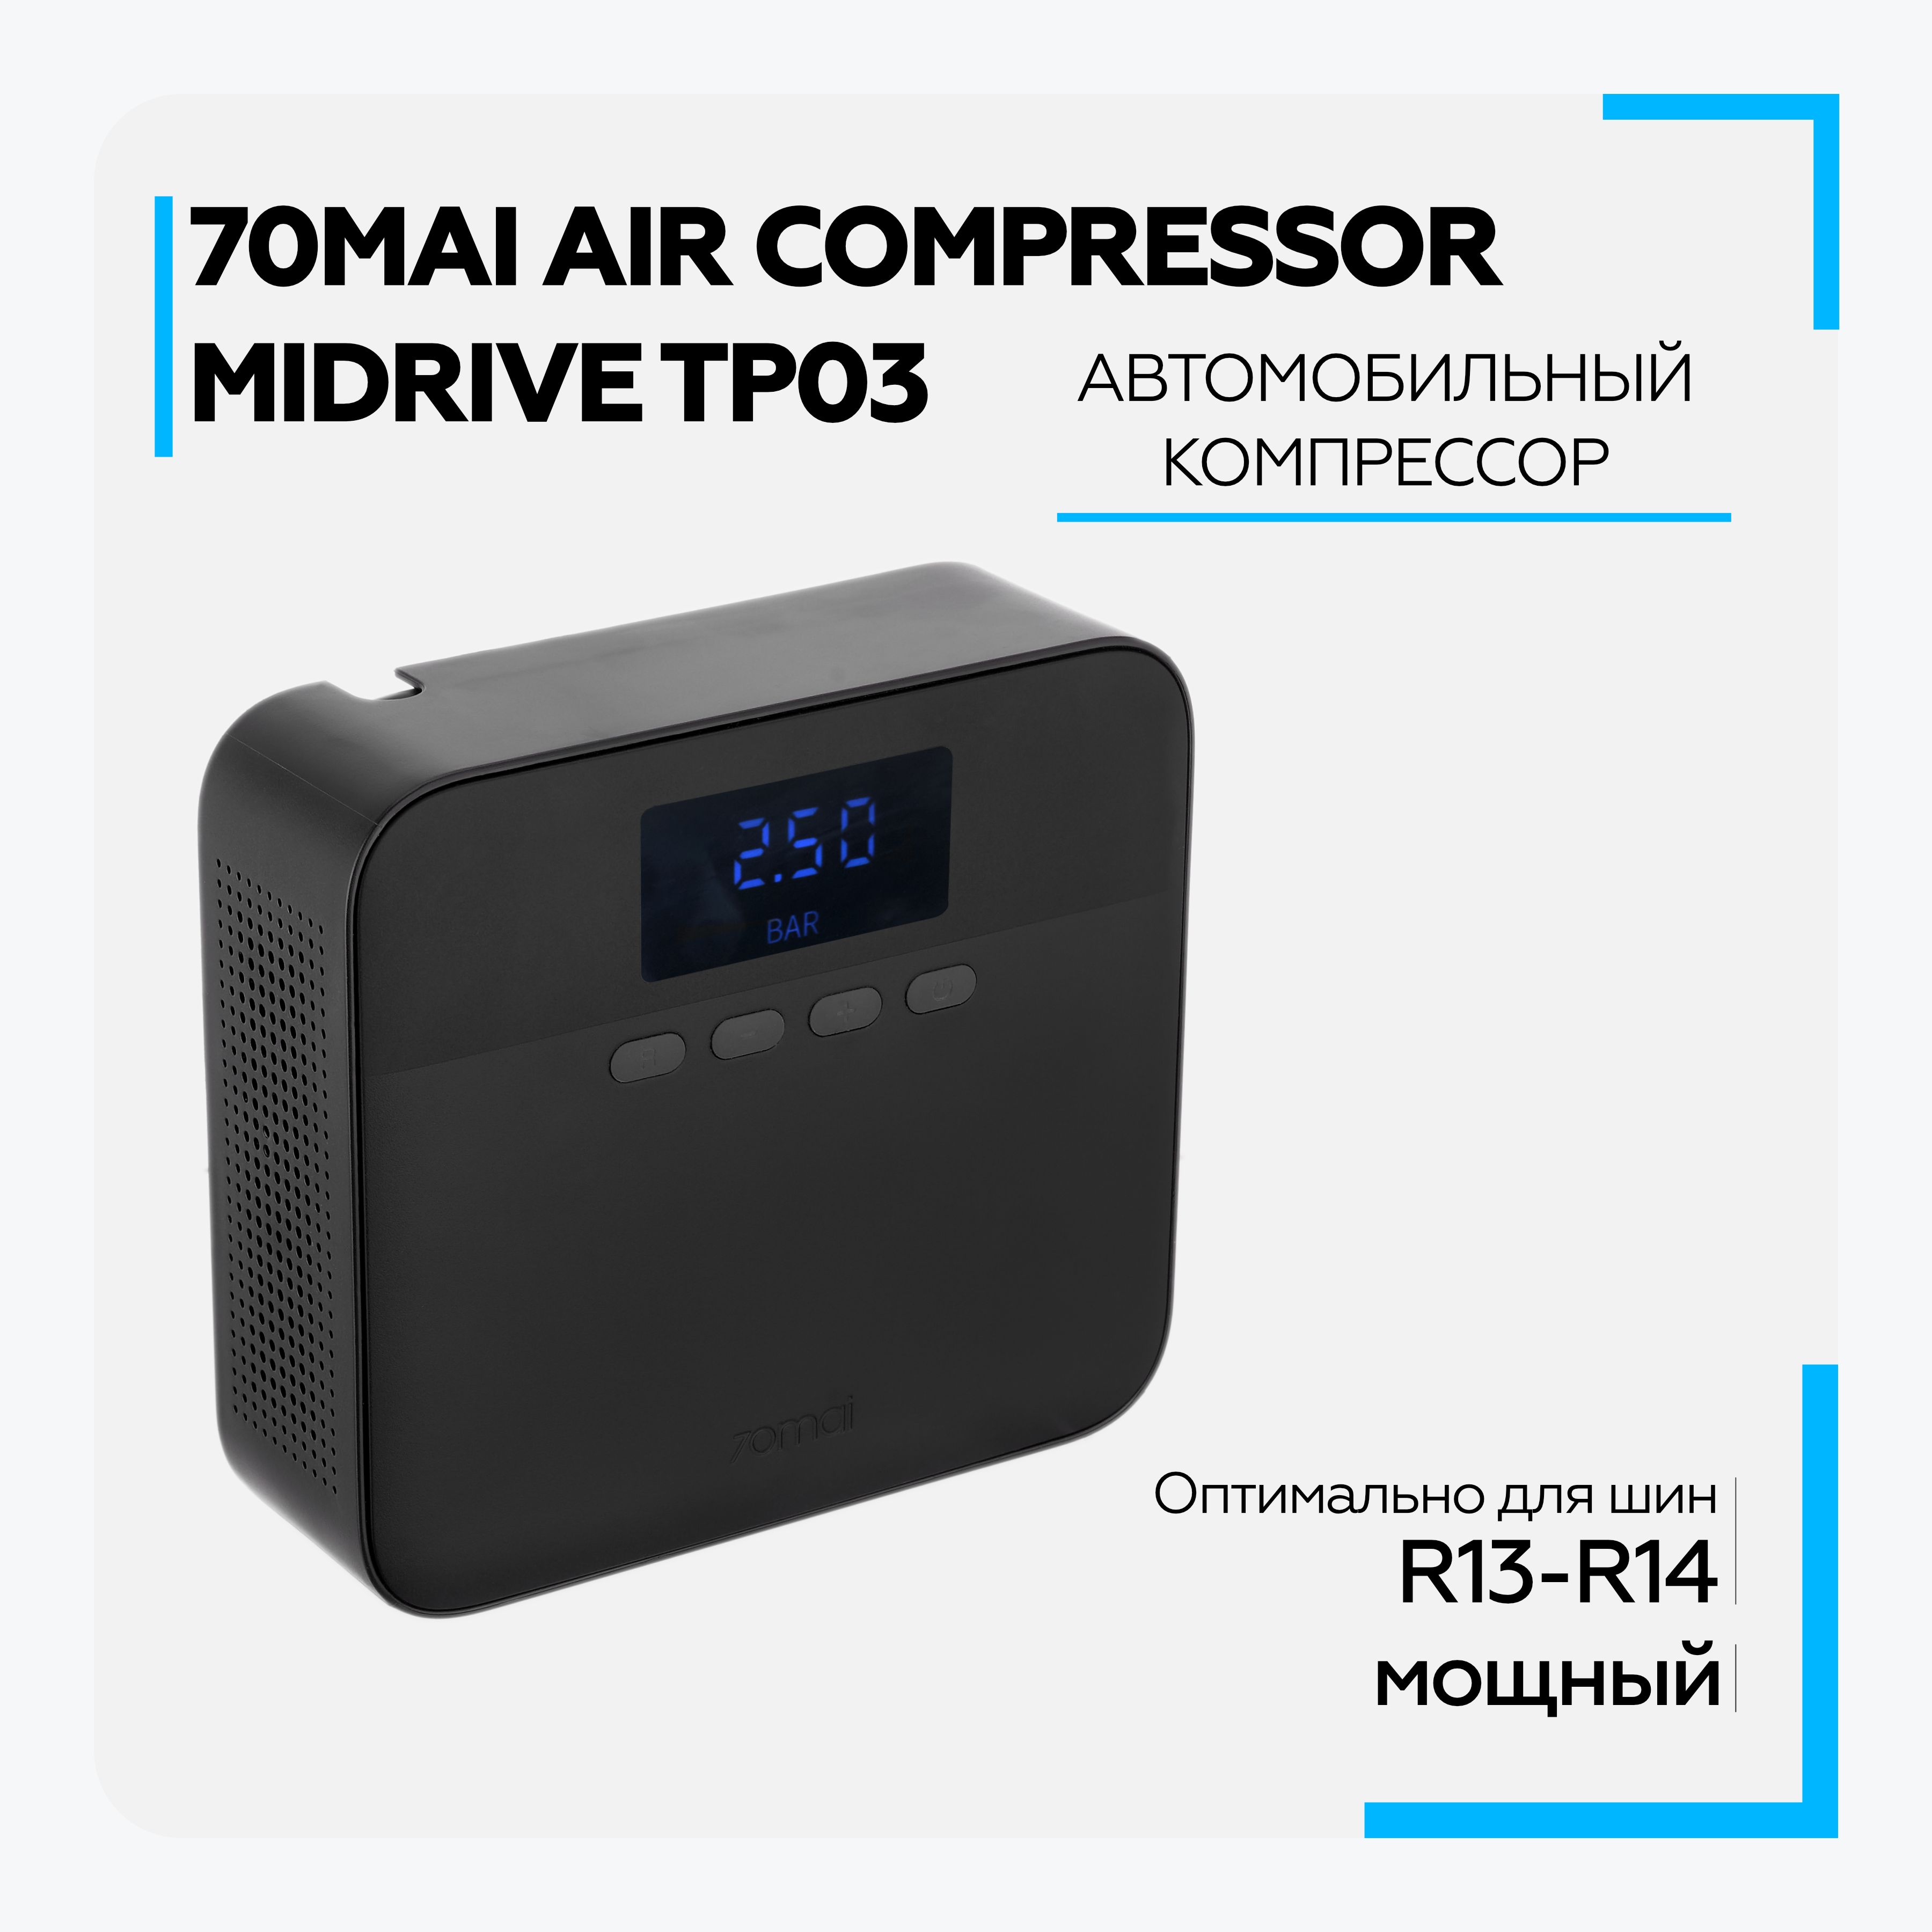 70mai air compressor lite midrive. Автомобильный компрессор Xiaomi 70mai Air Compressor Lite (MIDRIVE tp03). Автомобильный компрессор 70mai Air Compressor Lite MIDRIVE. Автомобильный компрессор 70mai Air Compressor Lite MIDRIVE tp03. 70mai Air Compressor Lite.